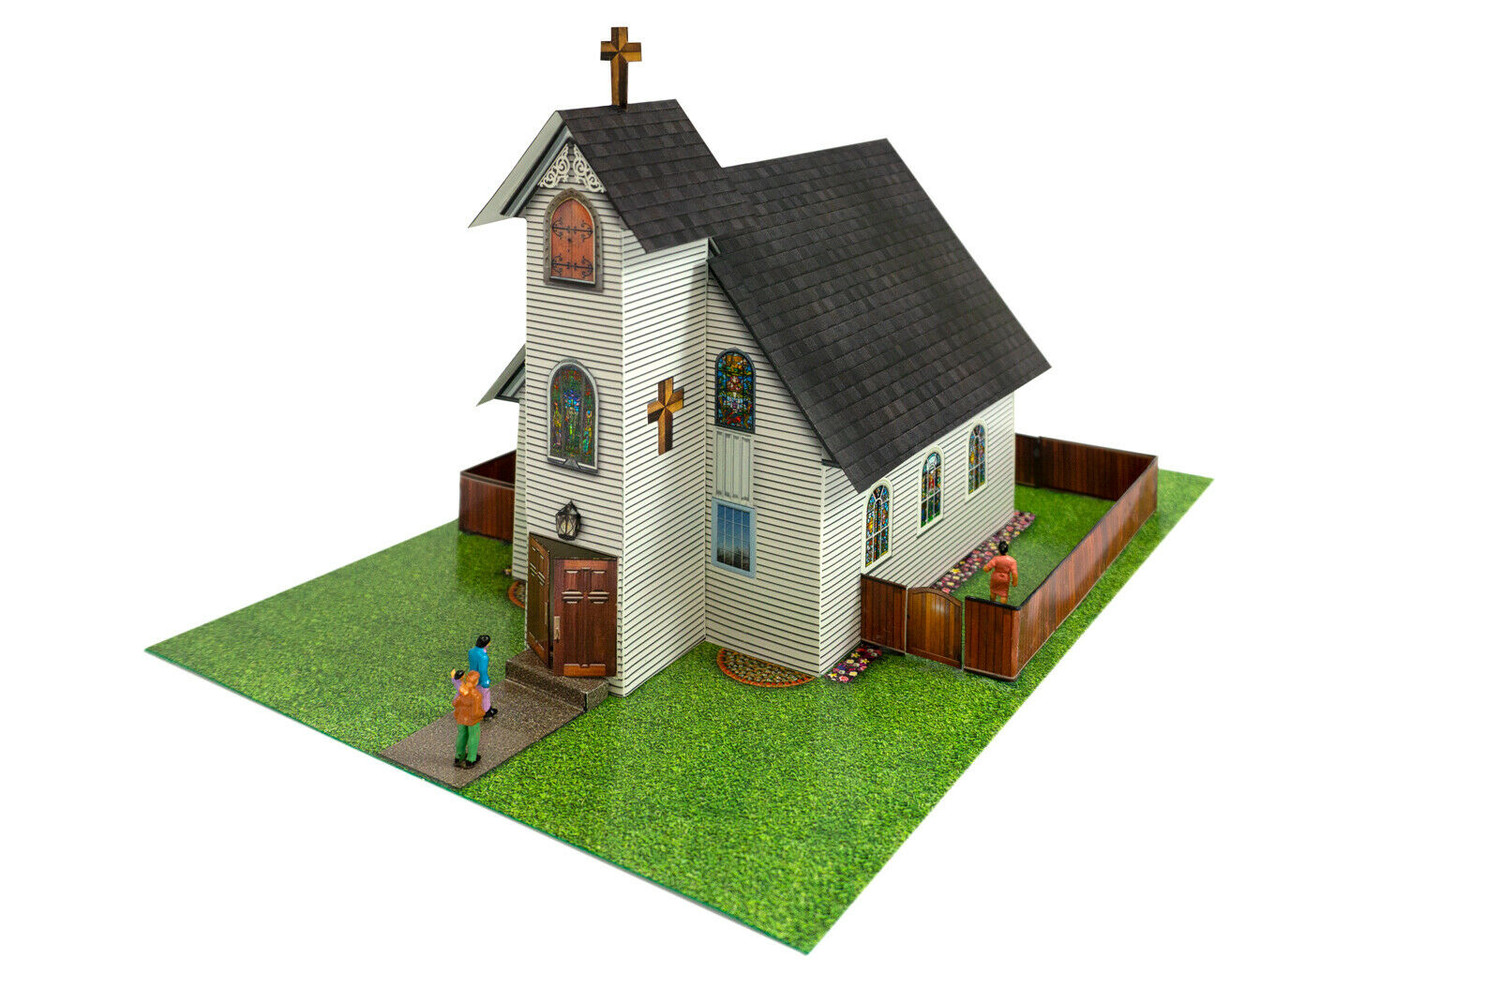 BK 4839 1:48 Scale Church Model Building Kit